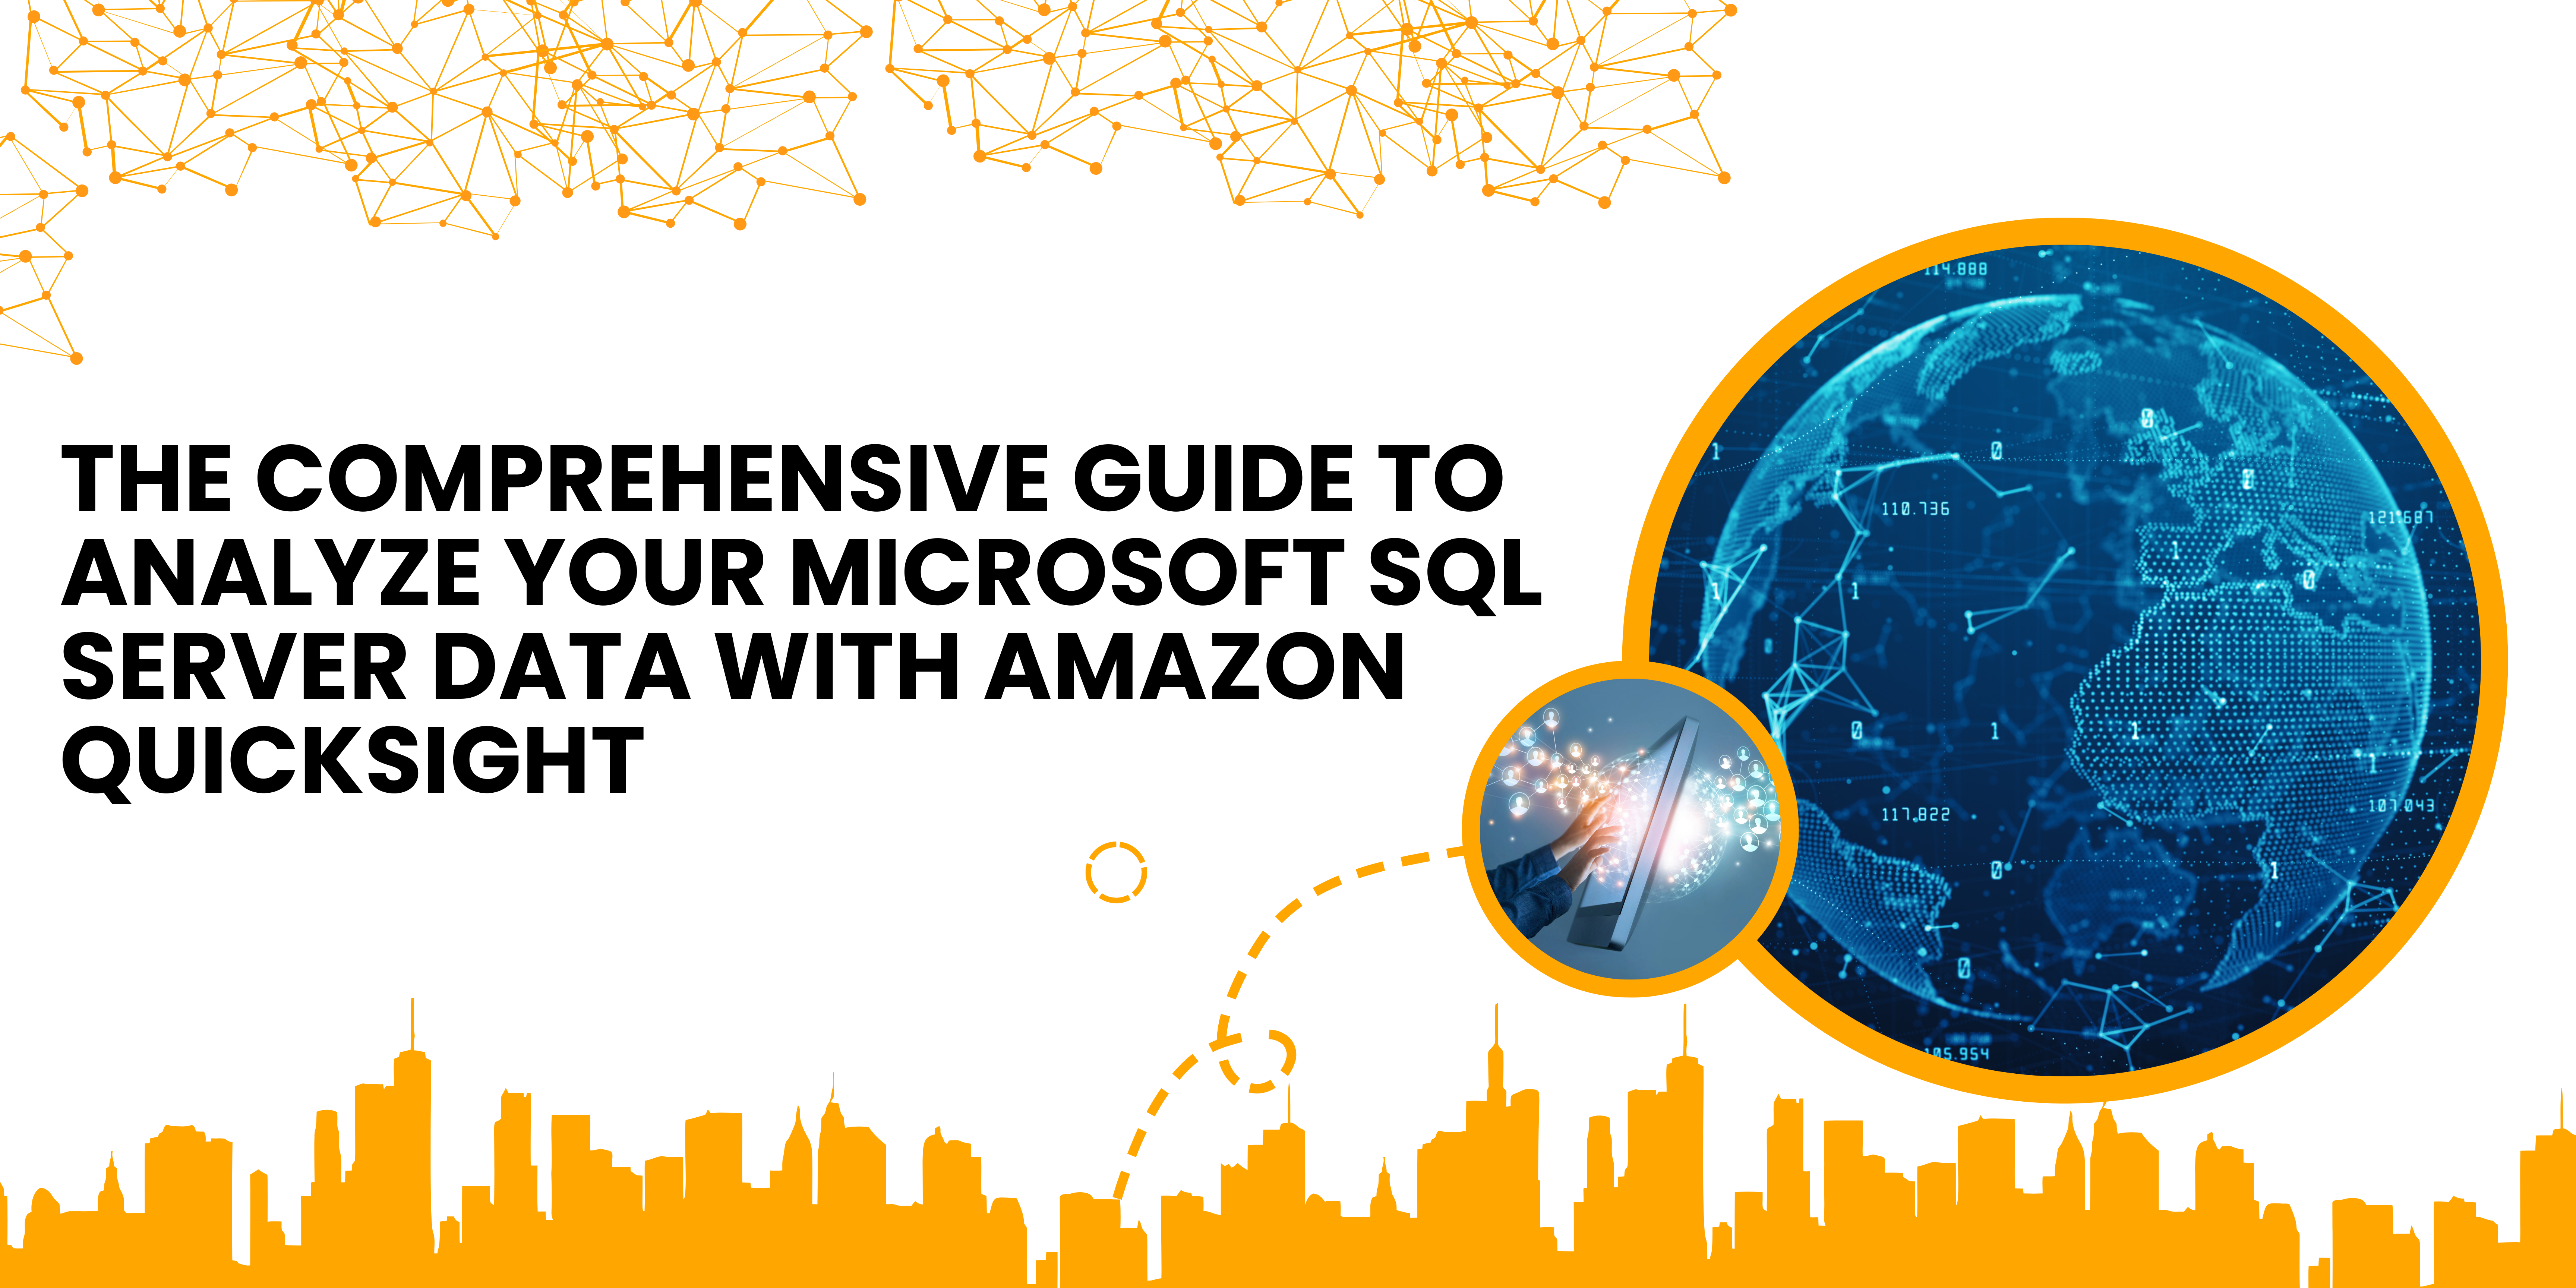 SQL Server Data with Amazon Quicksight